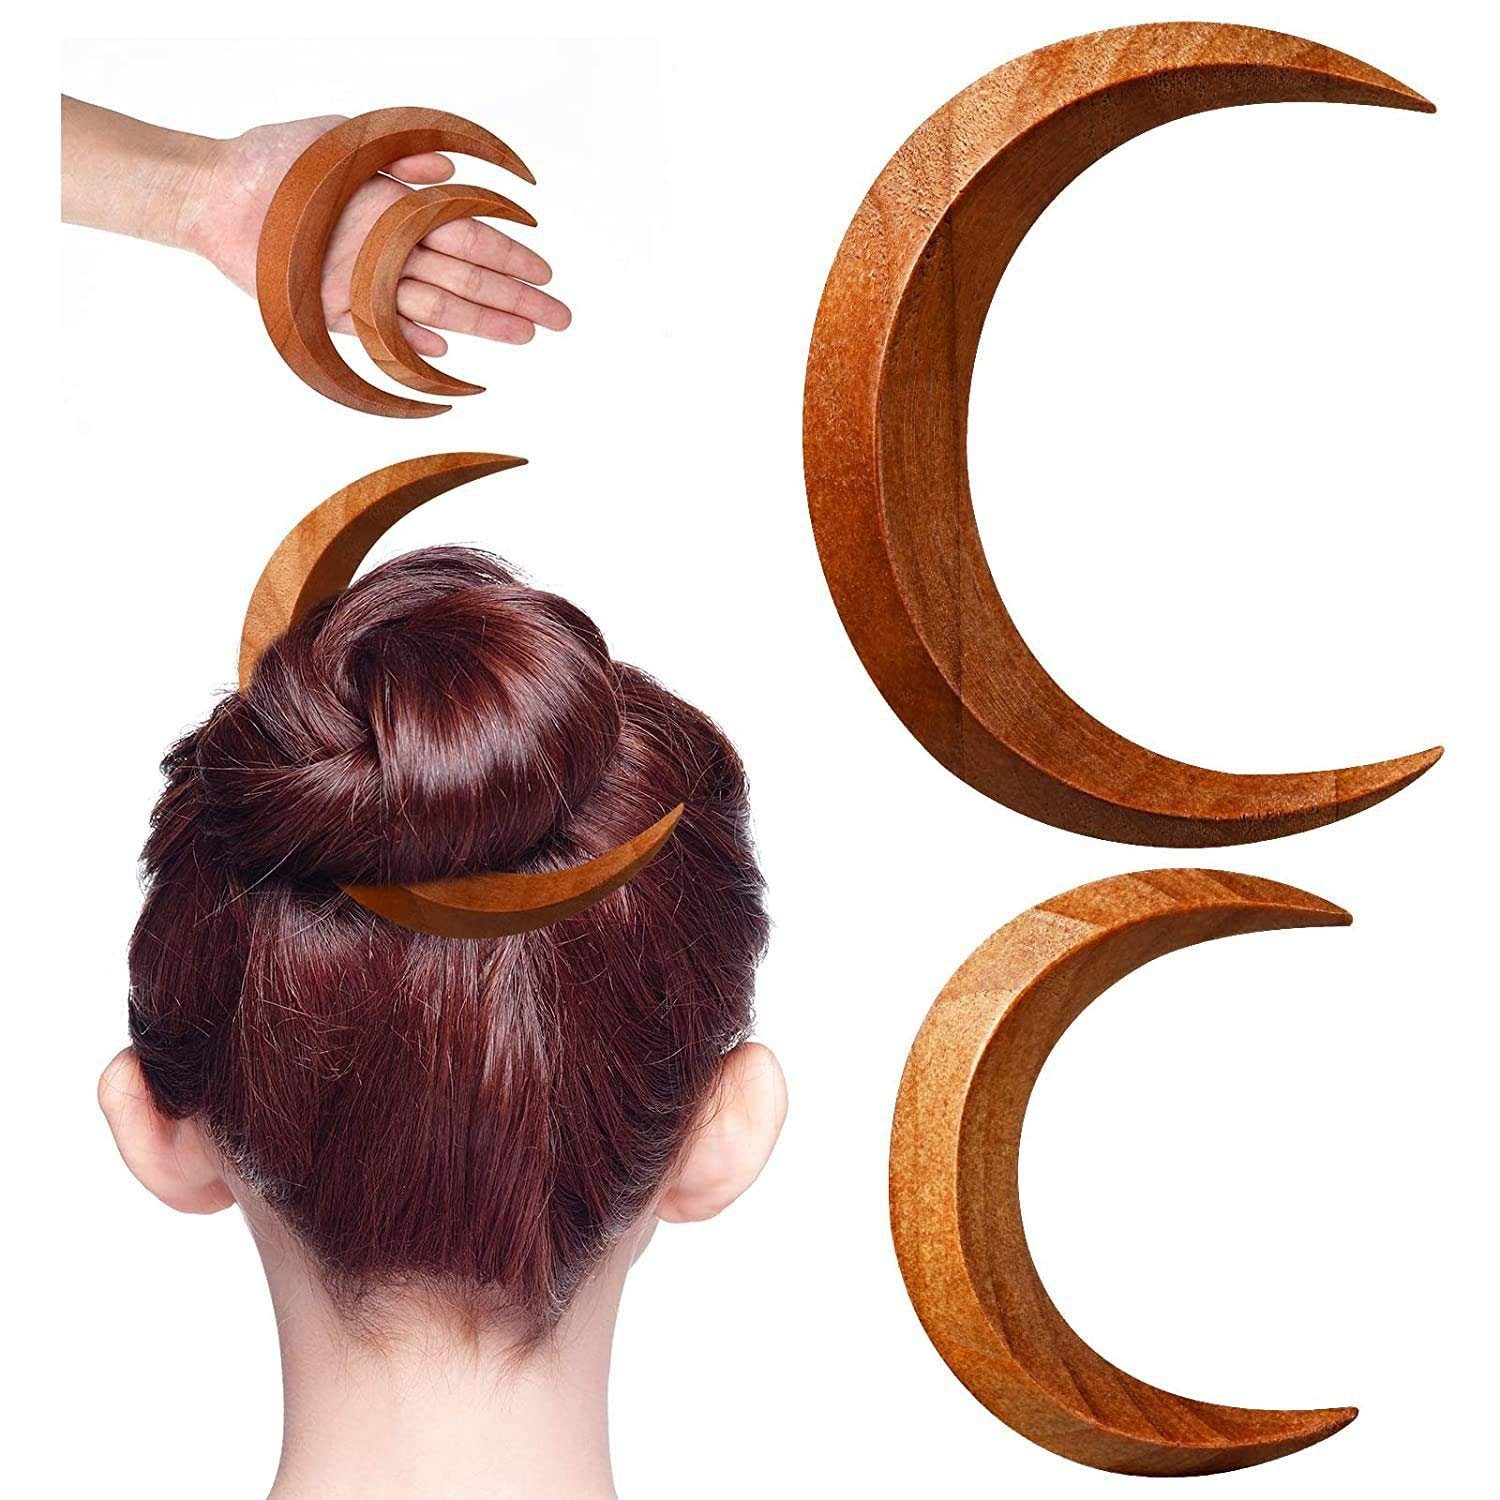 MAGICSHE Haarstyling-Set 2 handgefertigte halbmondförmige Haargabeln und Mondhaarstöcke, Haarschmuck Haarspange aus Holz in halbmondförmiger Form Rotbraun